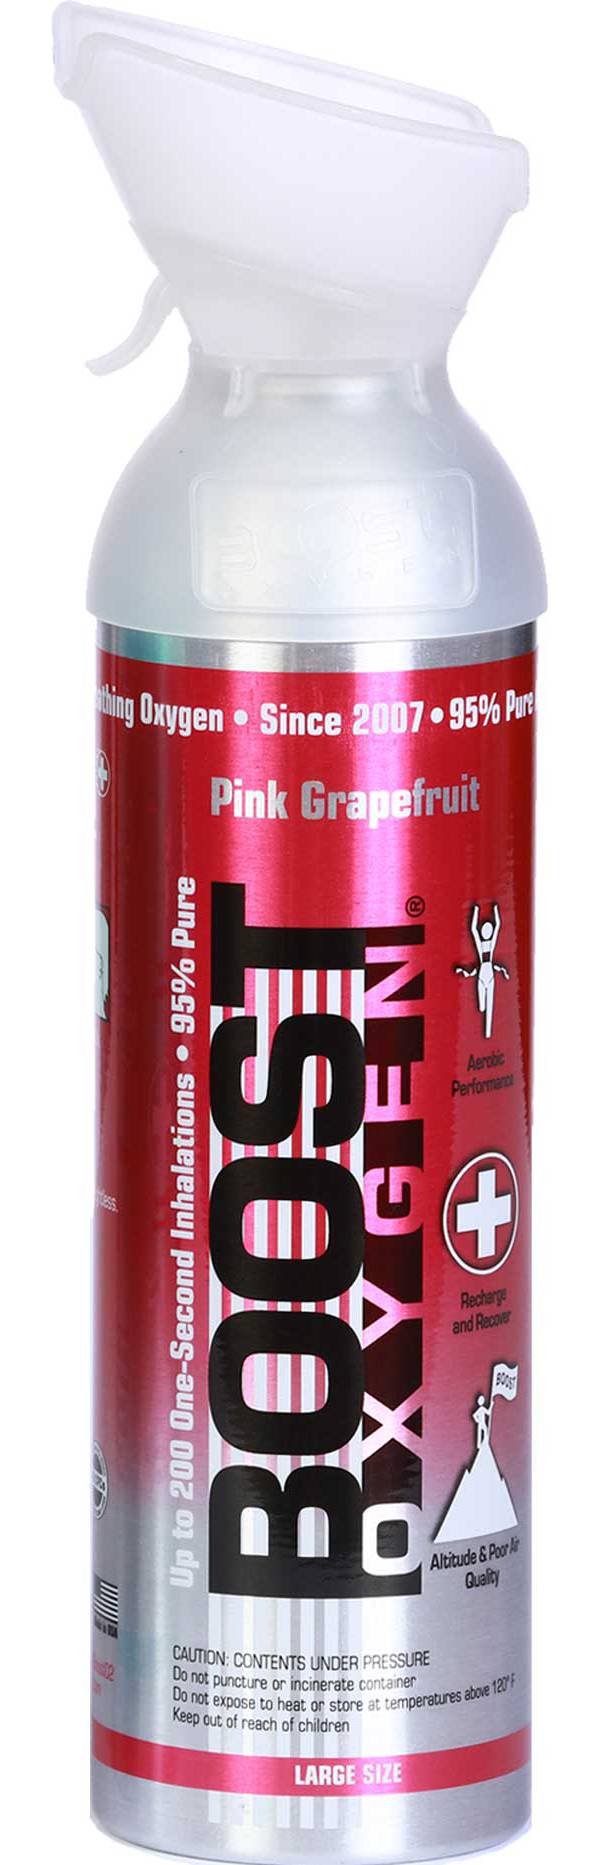 Boost Oxygen 10-Liter Bottle Sports Oxygen Pink Grapefruit